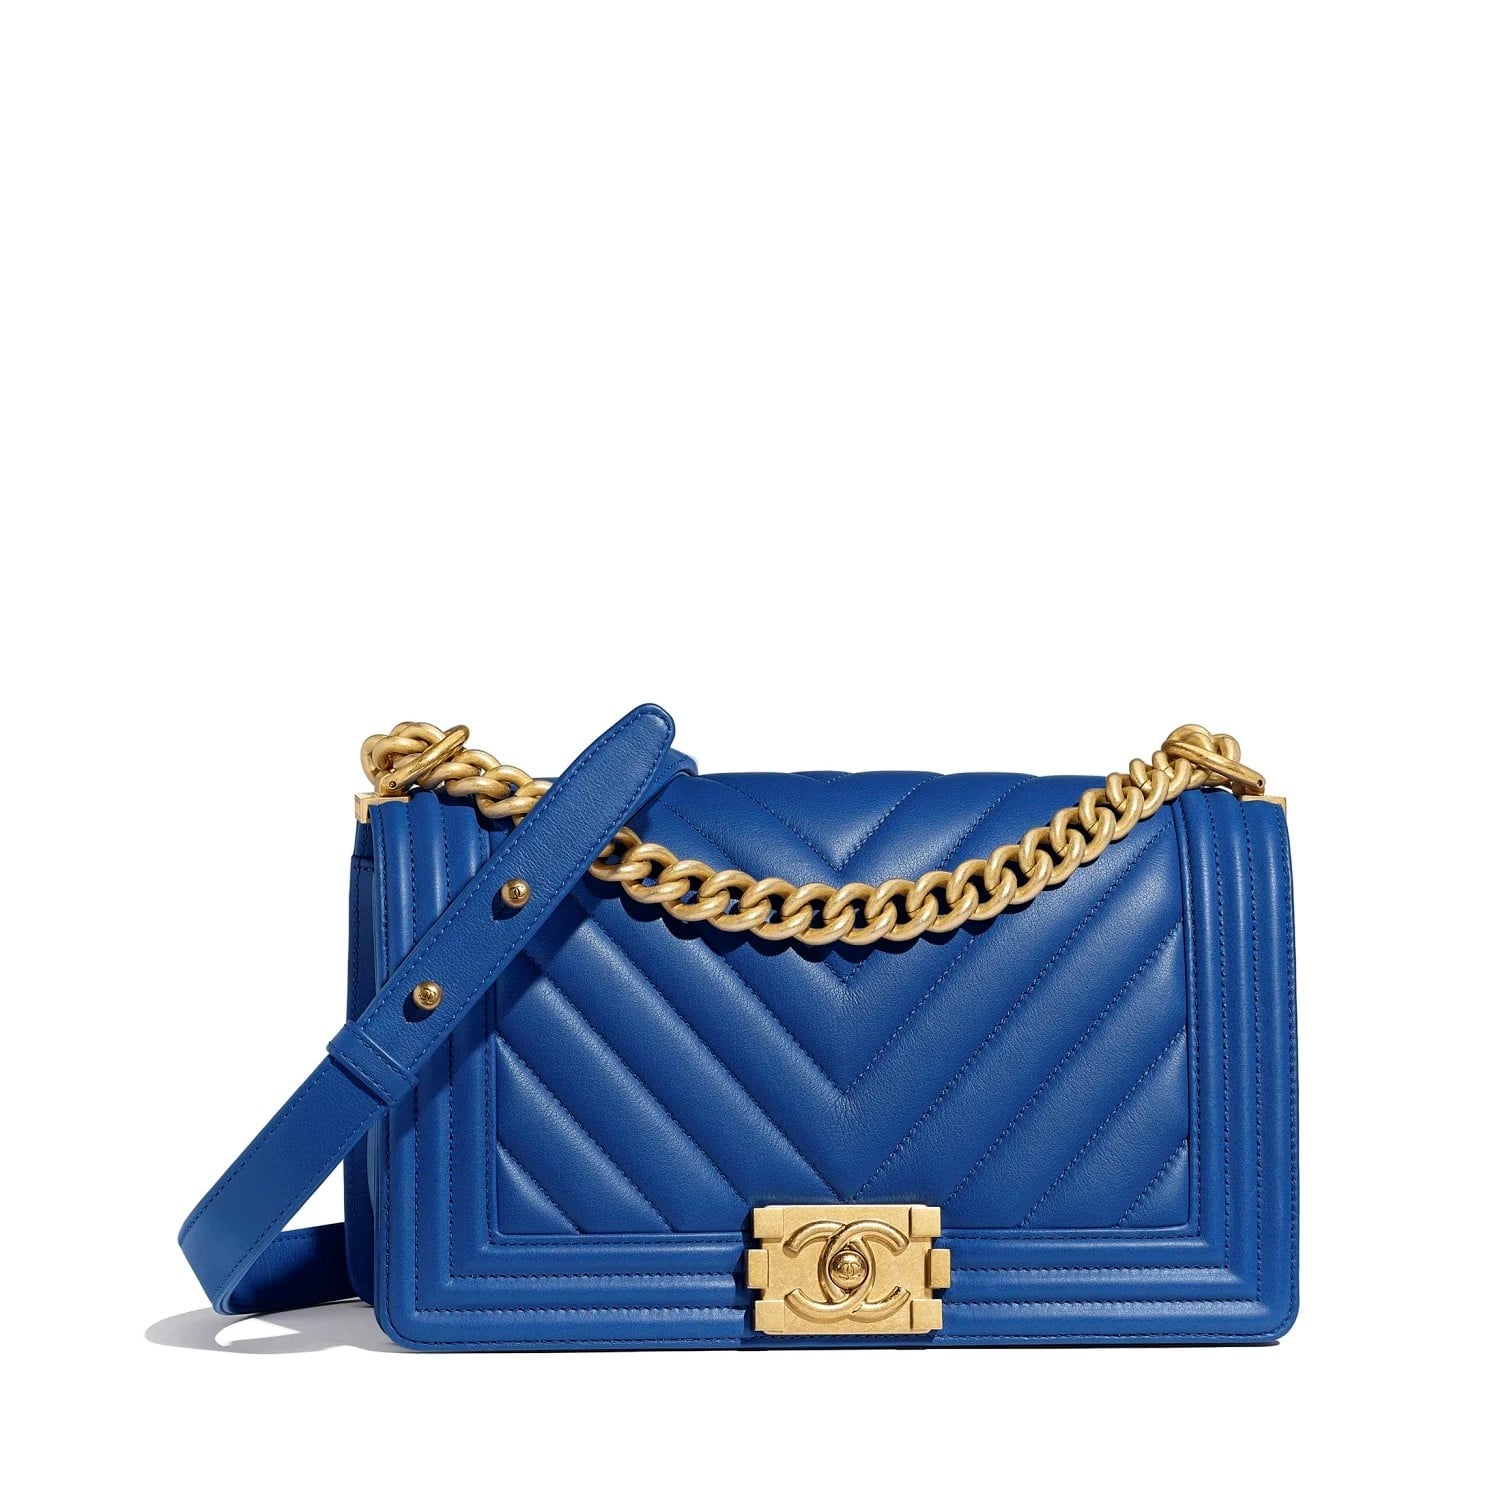 Chanel Boy Dark Blue Handbag